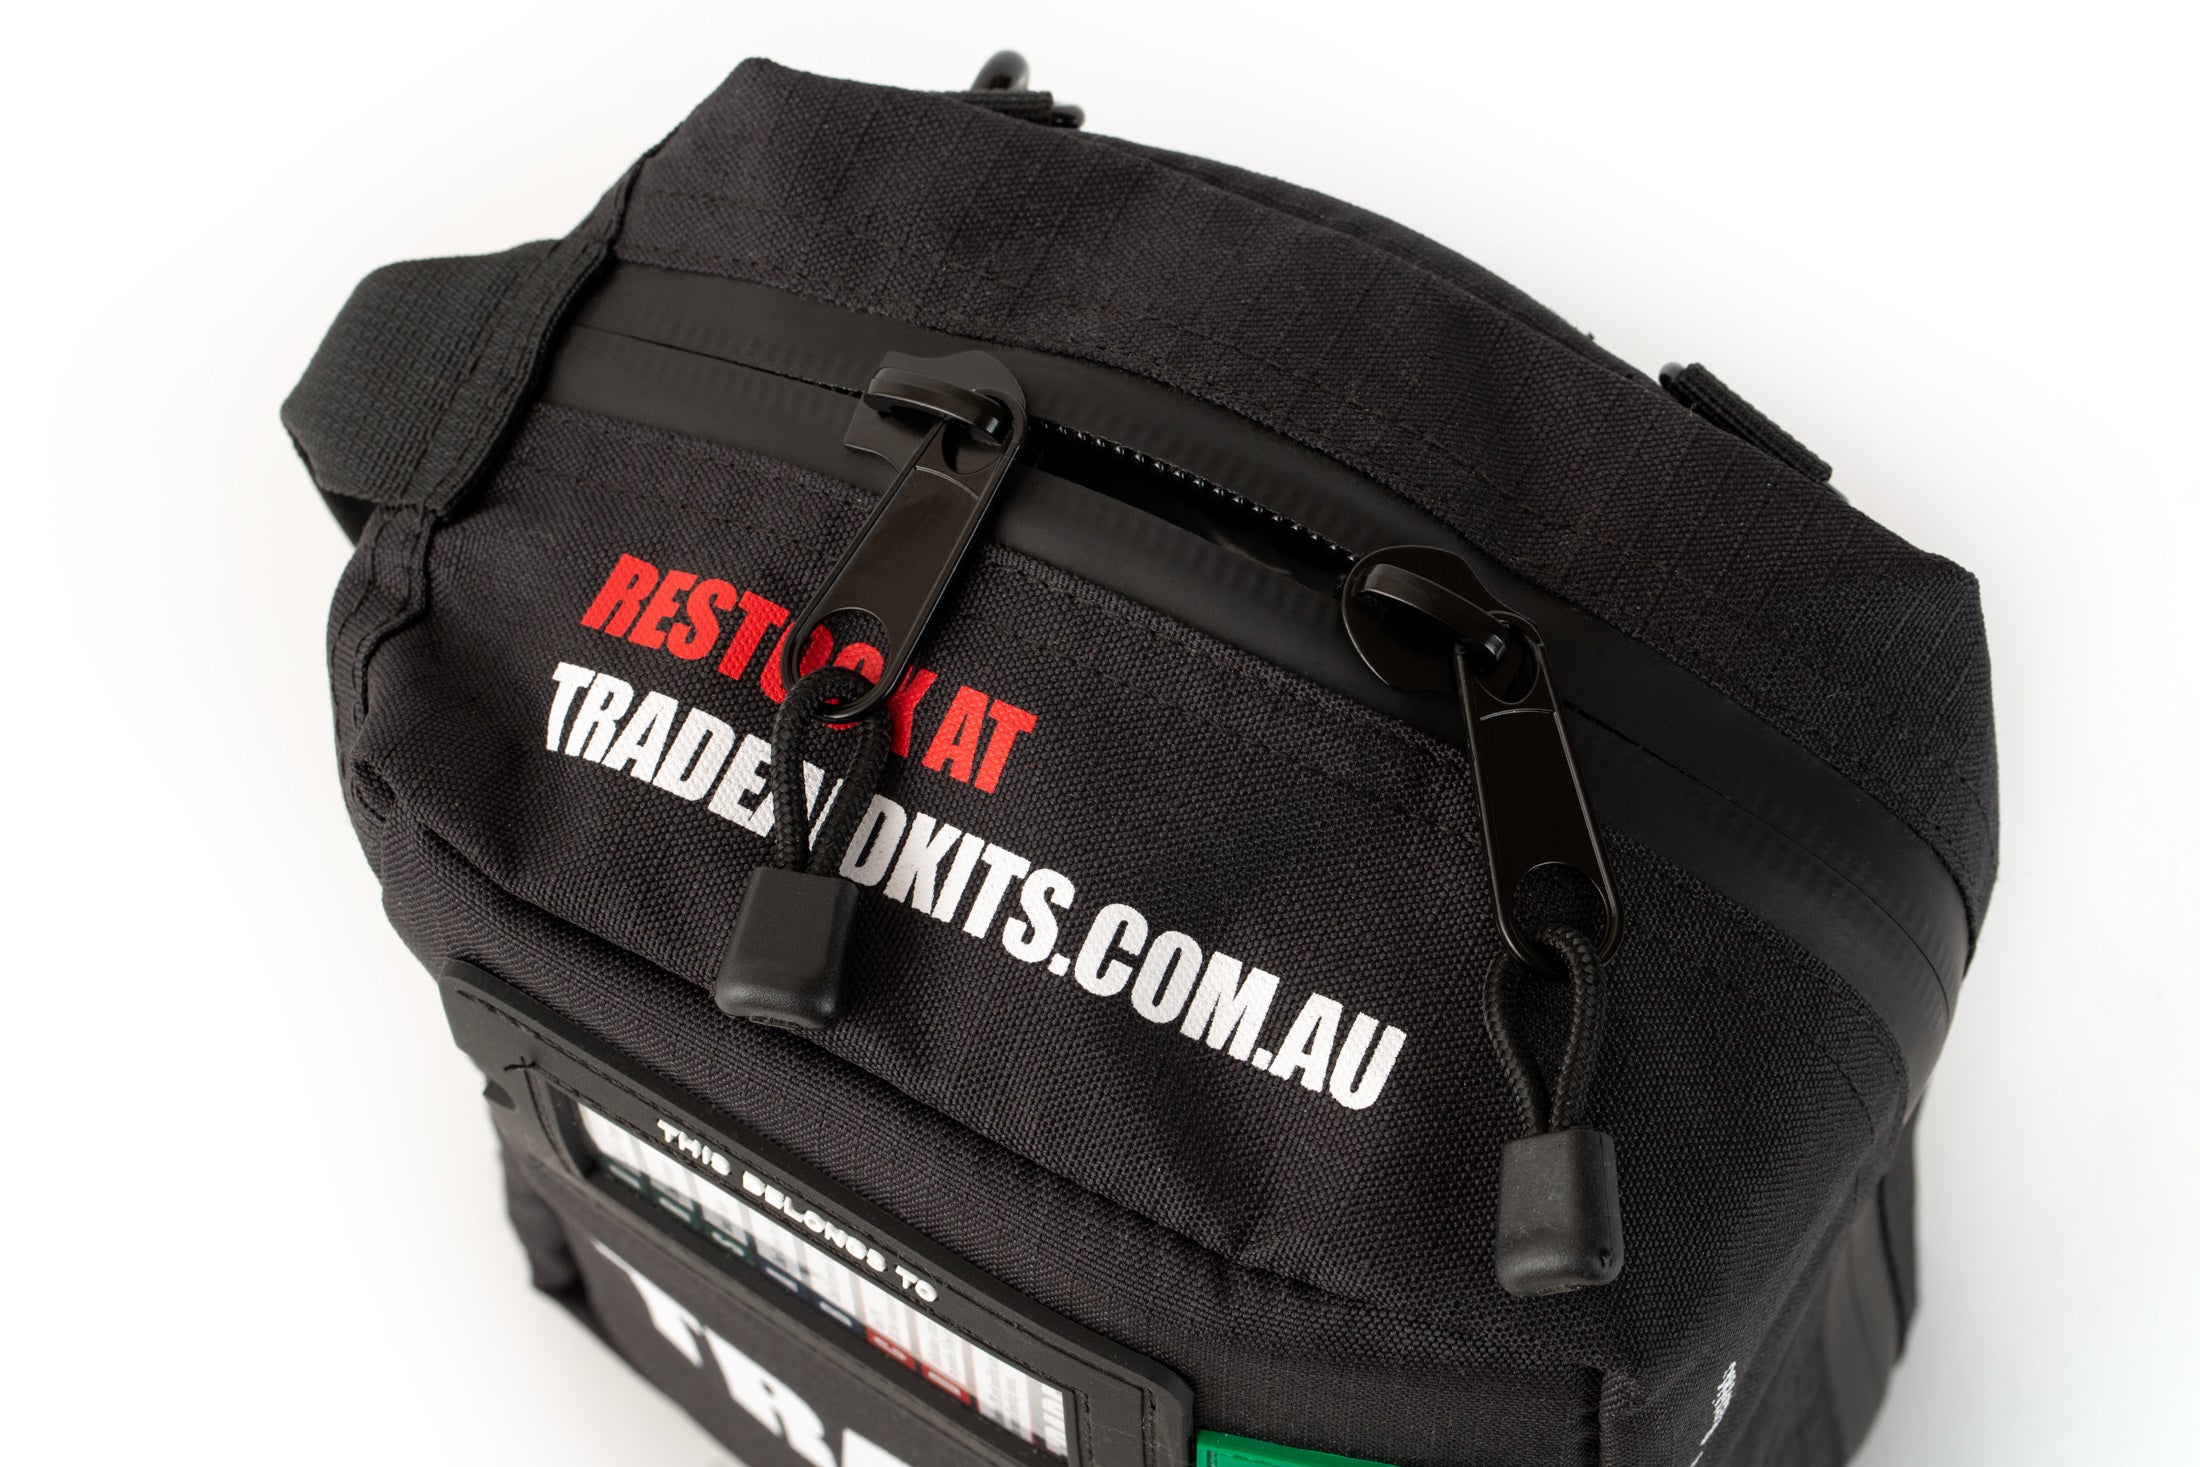 The Classic Trade Aid Kit: Inc UV400 SafeStyles!